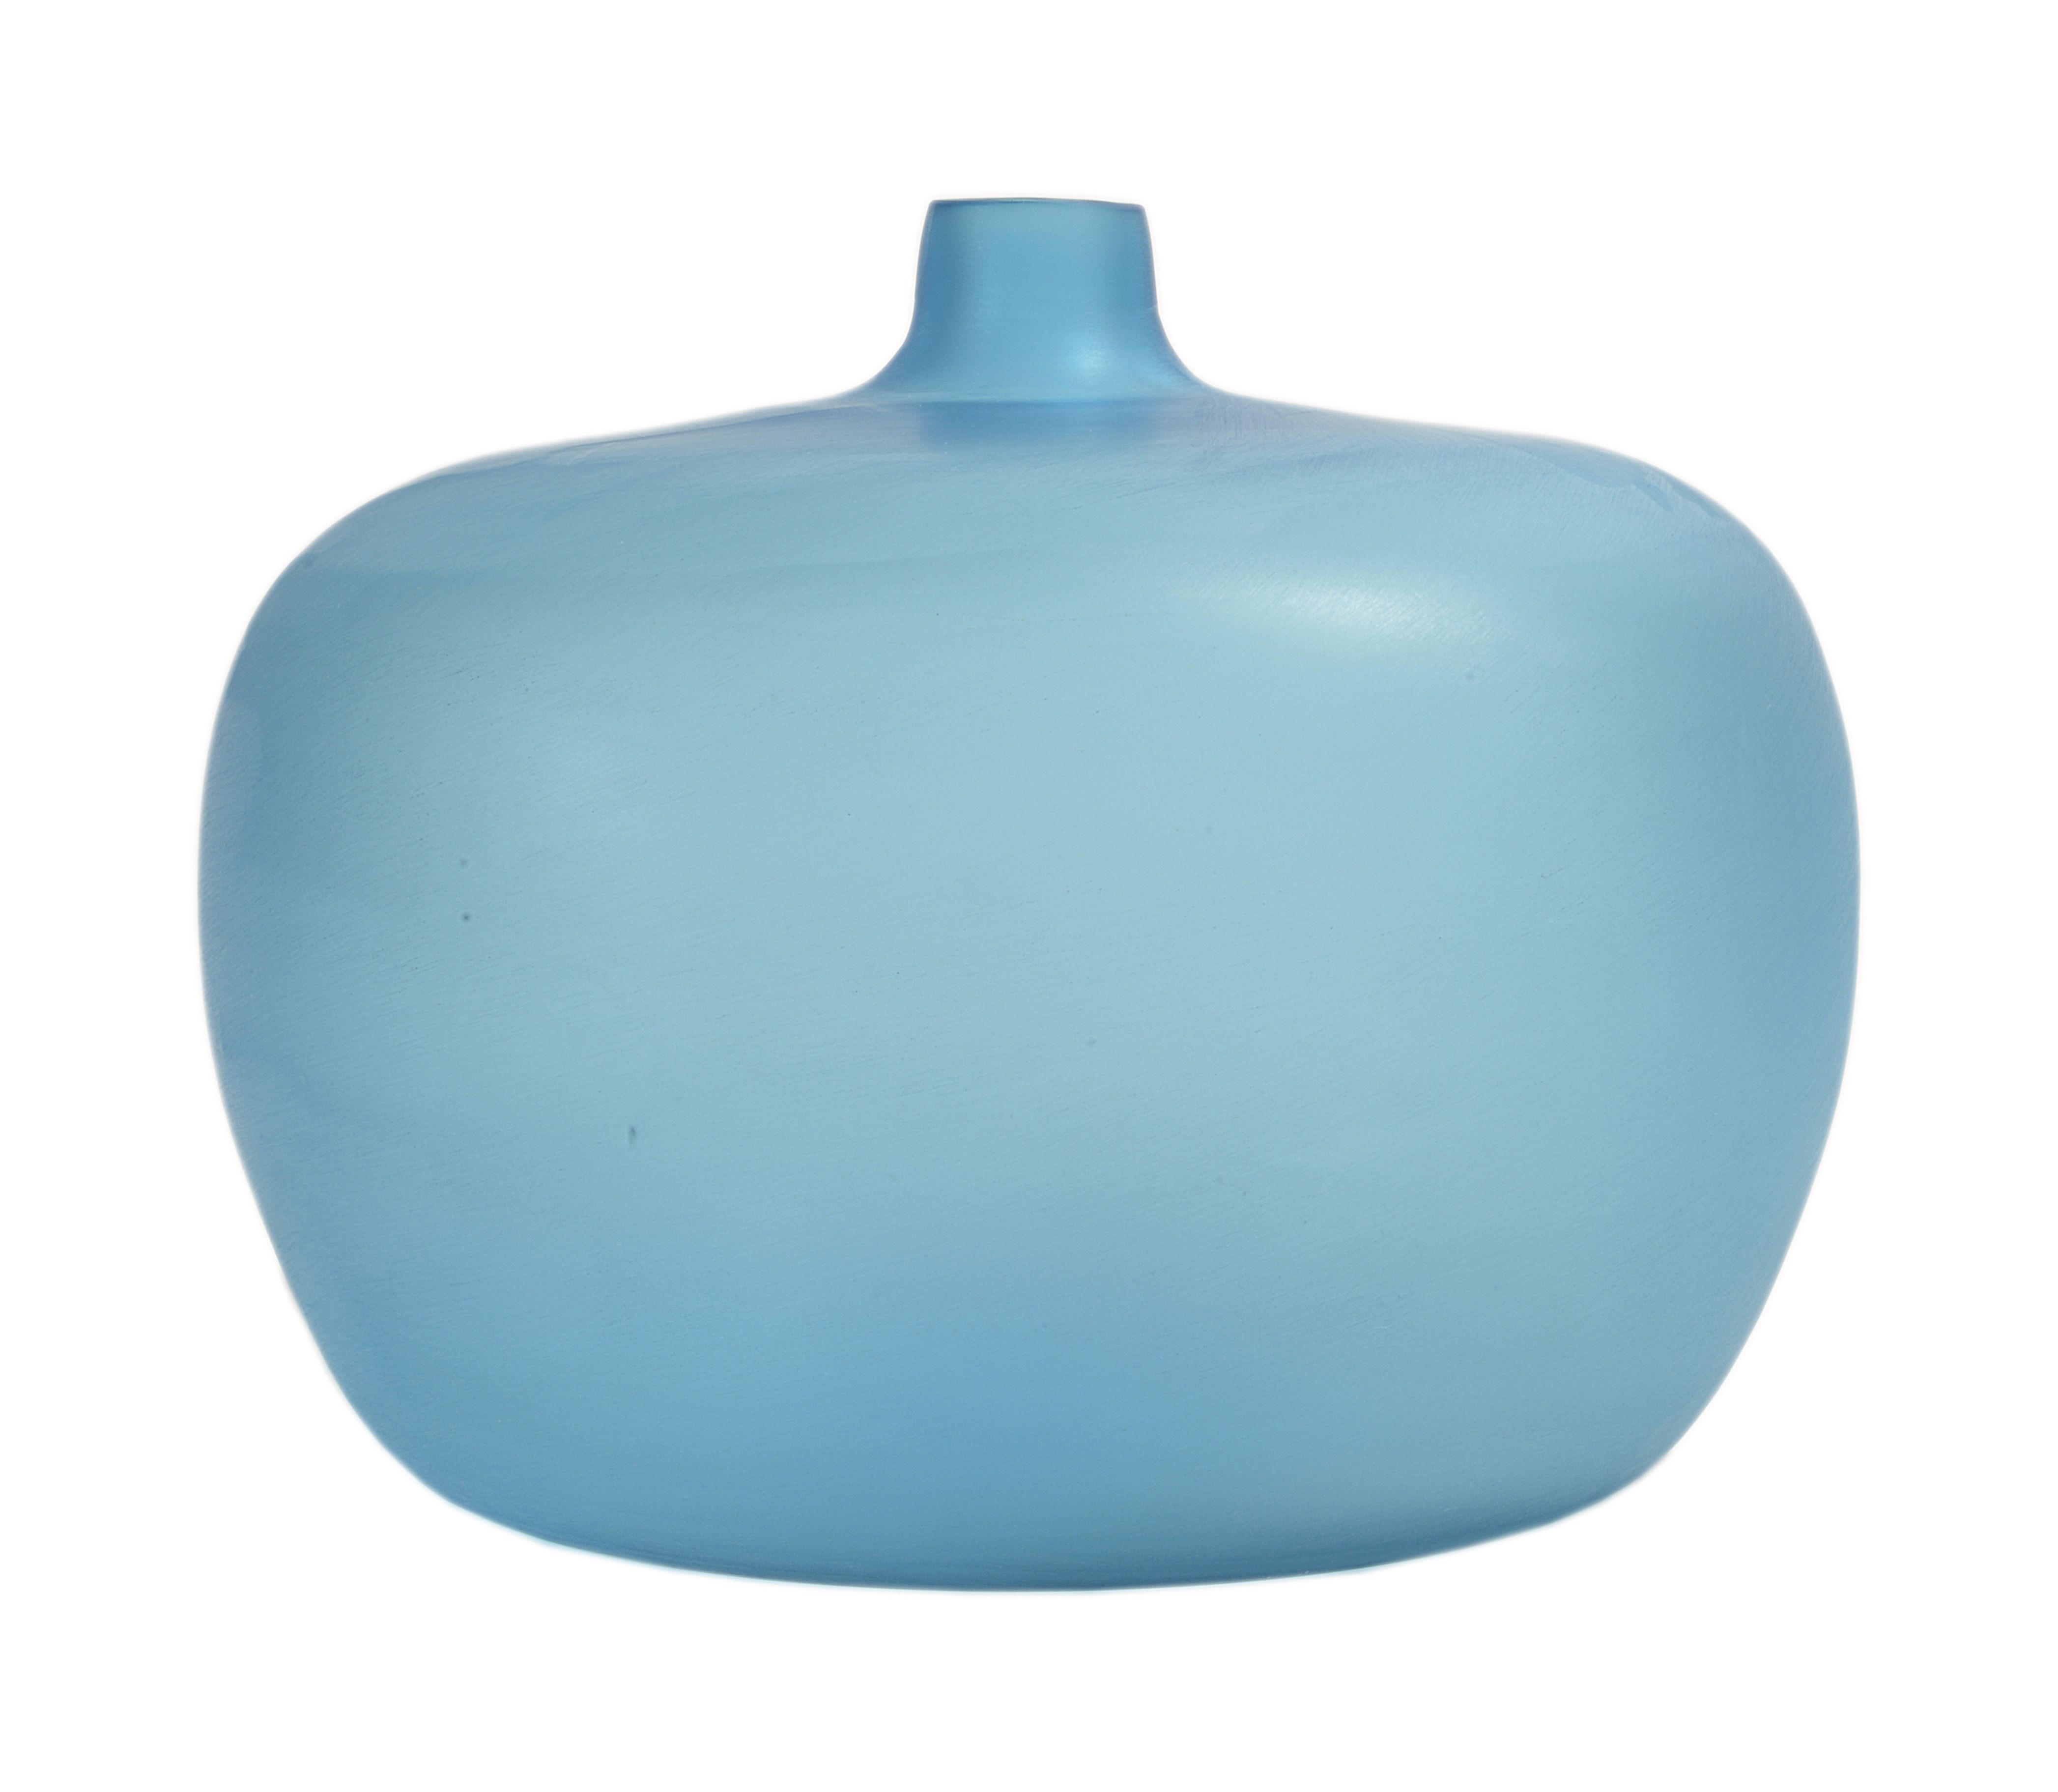 Studio of Venini, 
light blue vase in velato glass, designed in 1958/59, height 17cmCondition: